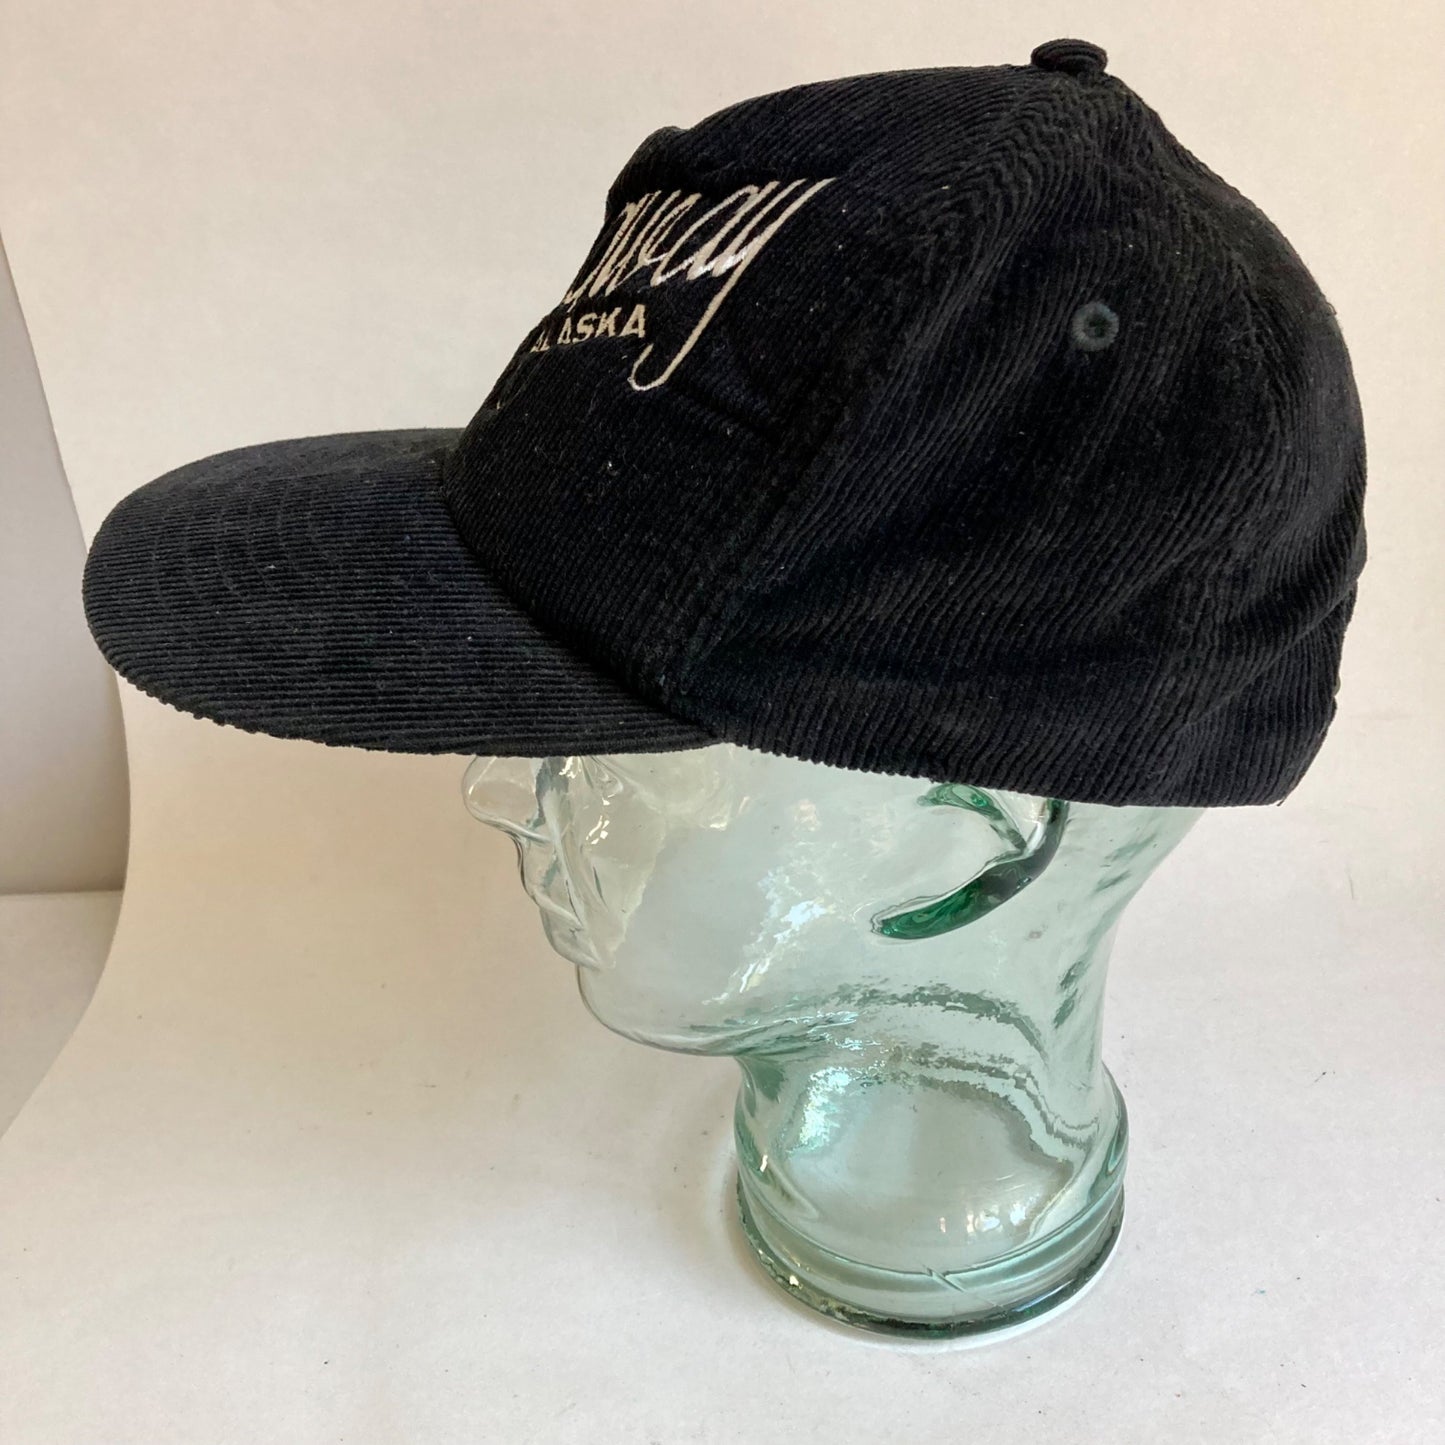 Vintage Skagway Alaska Black Corduroy Hat Snapback by A.C.E.